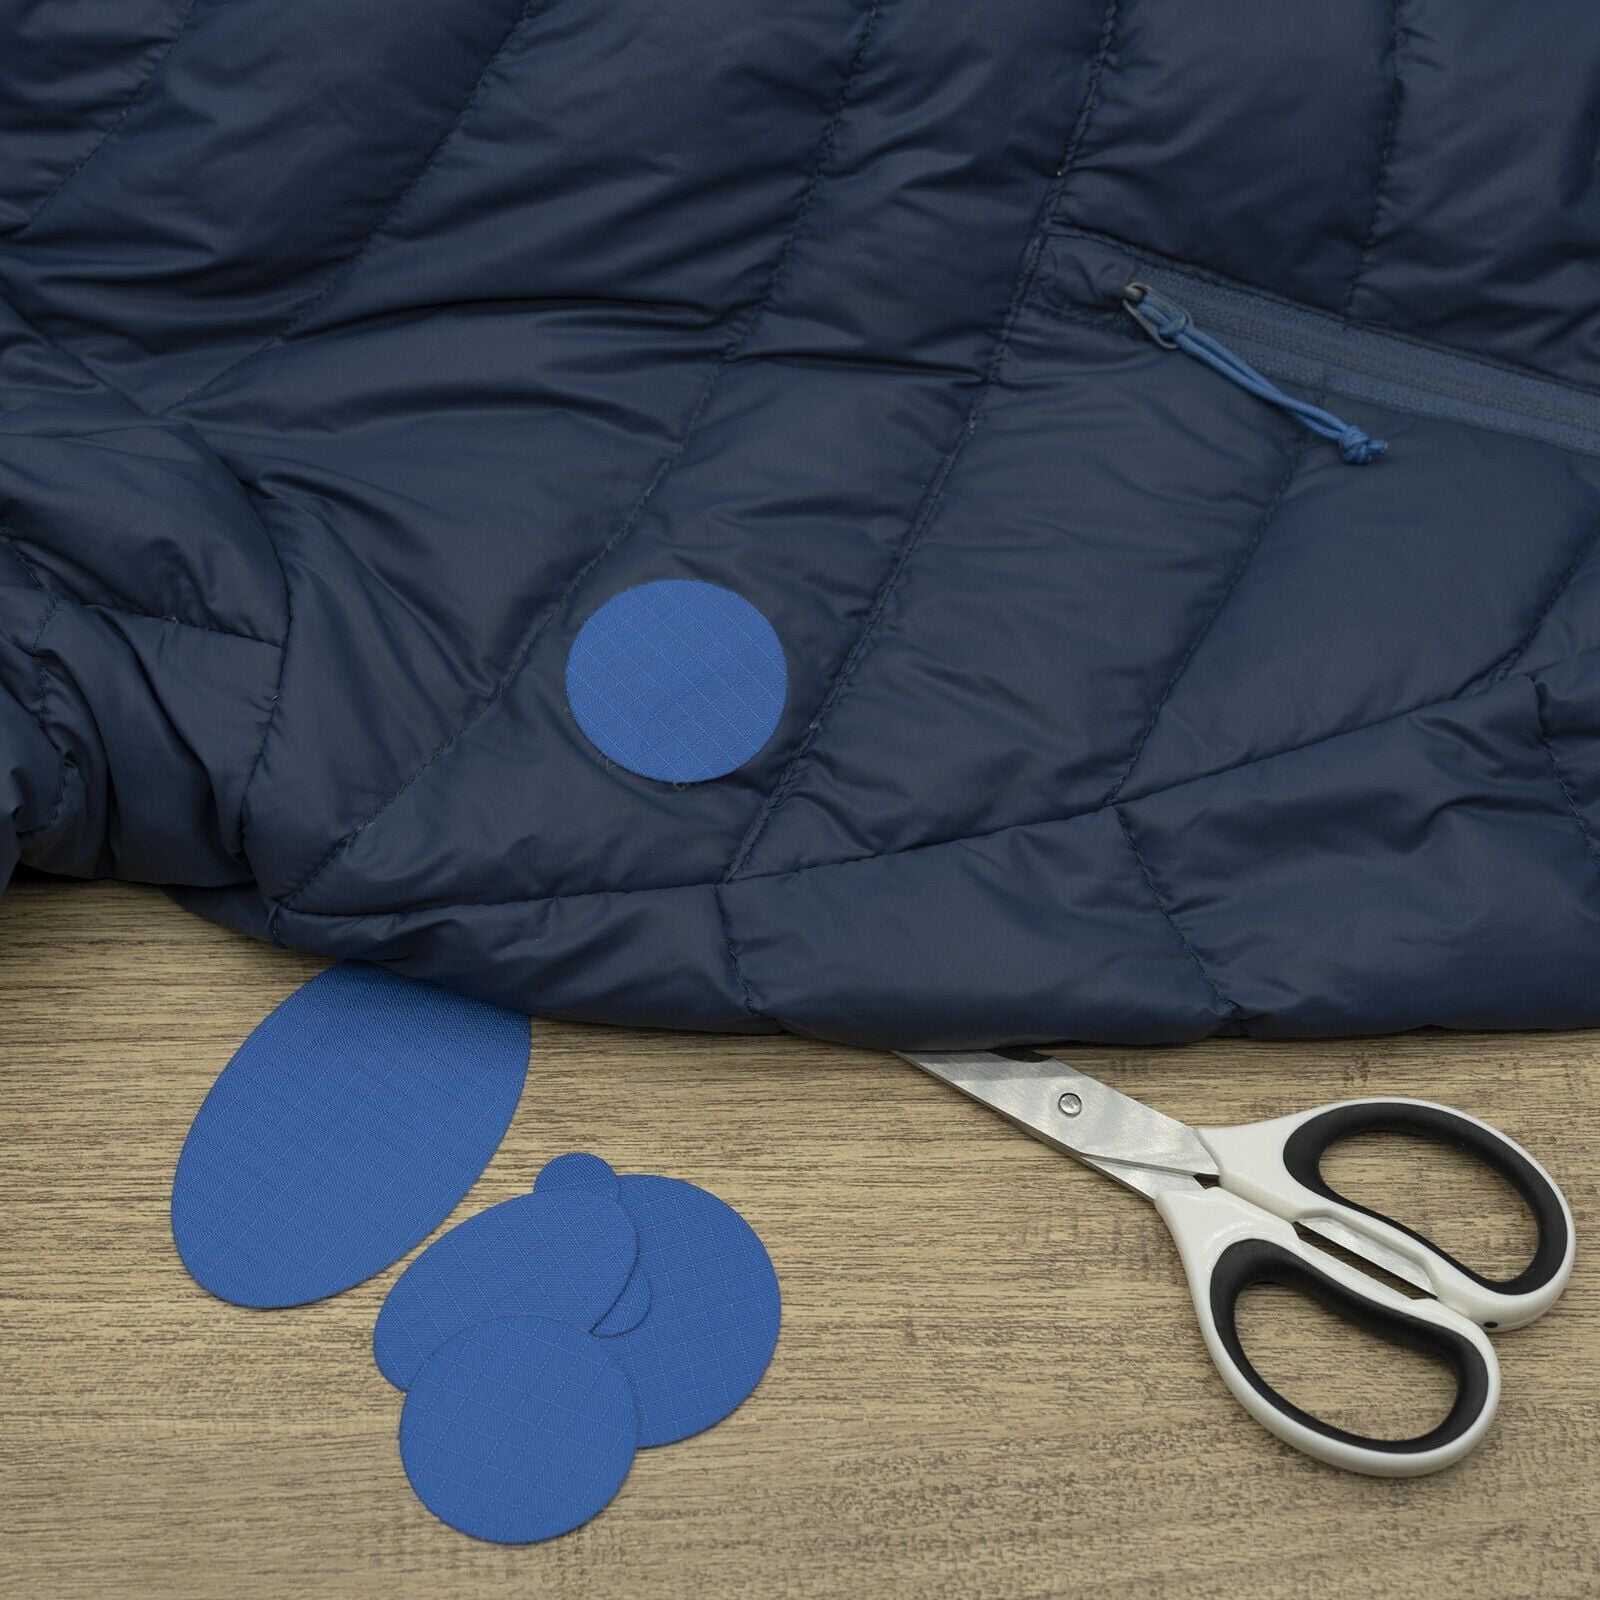 Puffer jacket repair - Can I use fabric glue : r/BuyItForLife